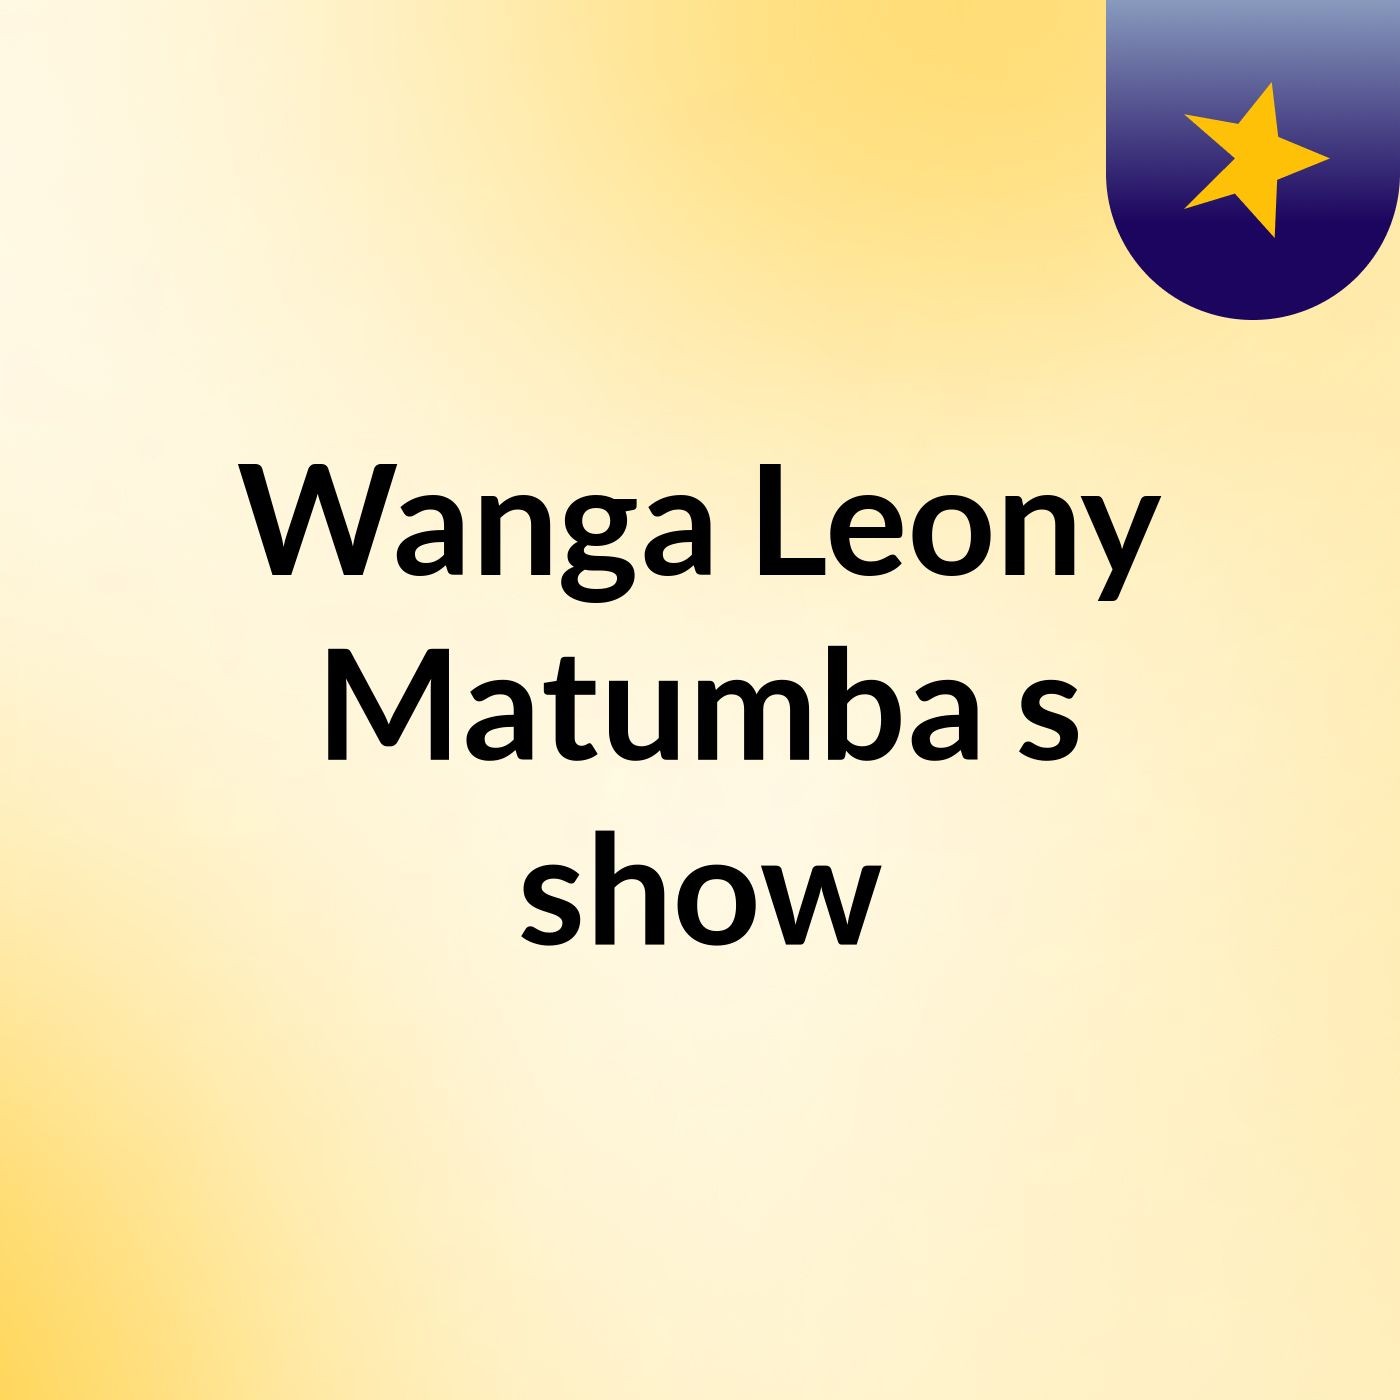 Wanga Leony Matumba's show